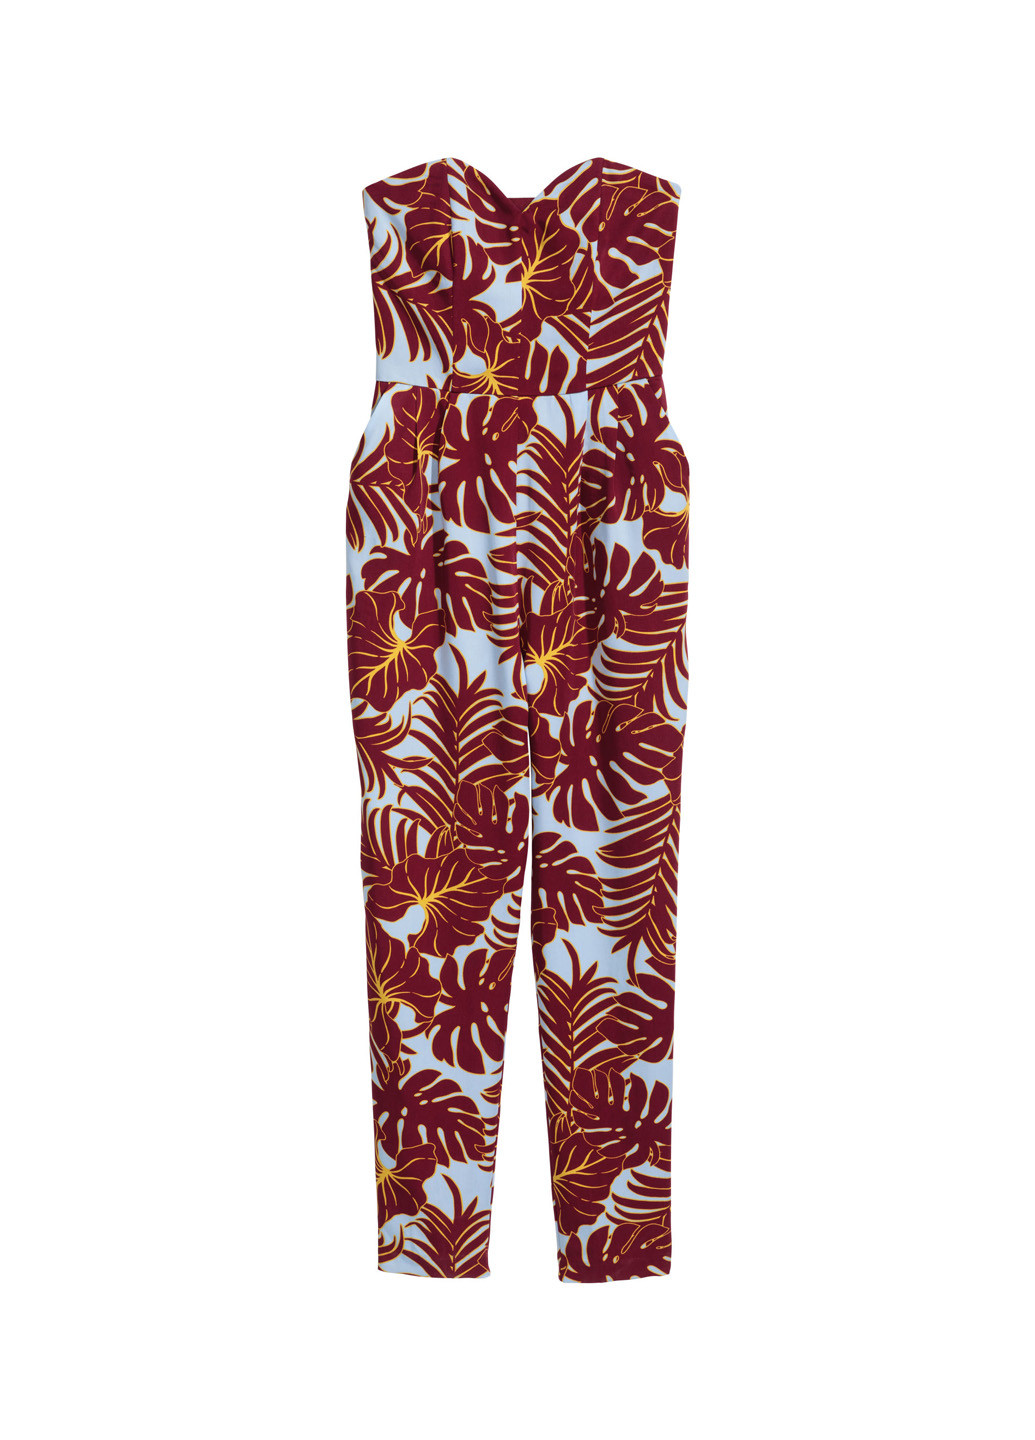 Комбинезон H&M комбинезон-брюки рисунок бордовый кэжуал лиоцелл